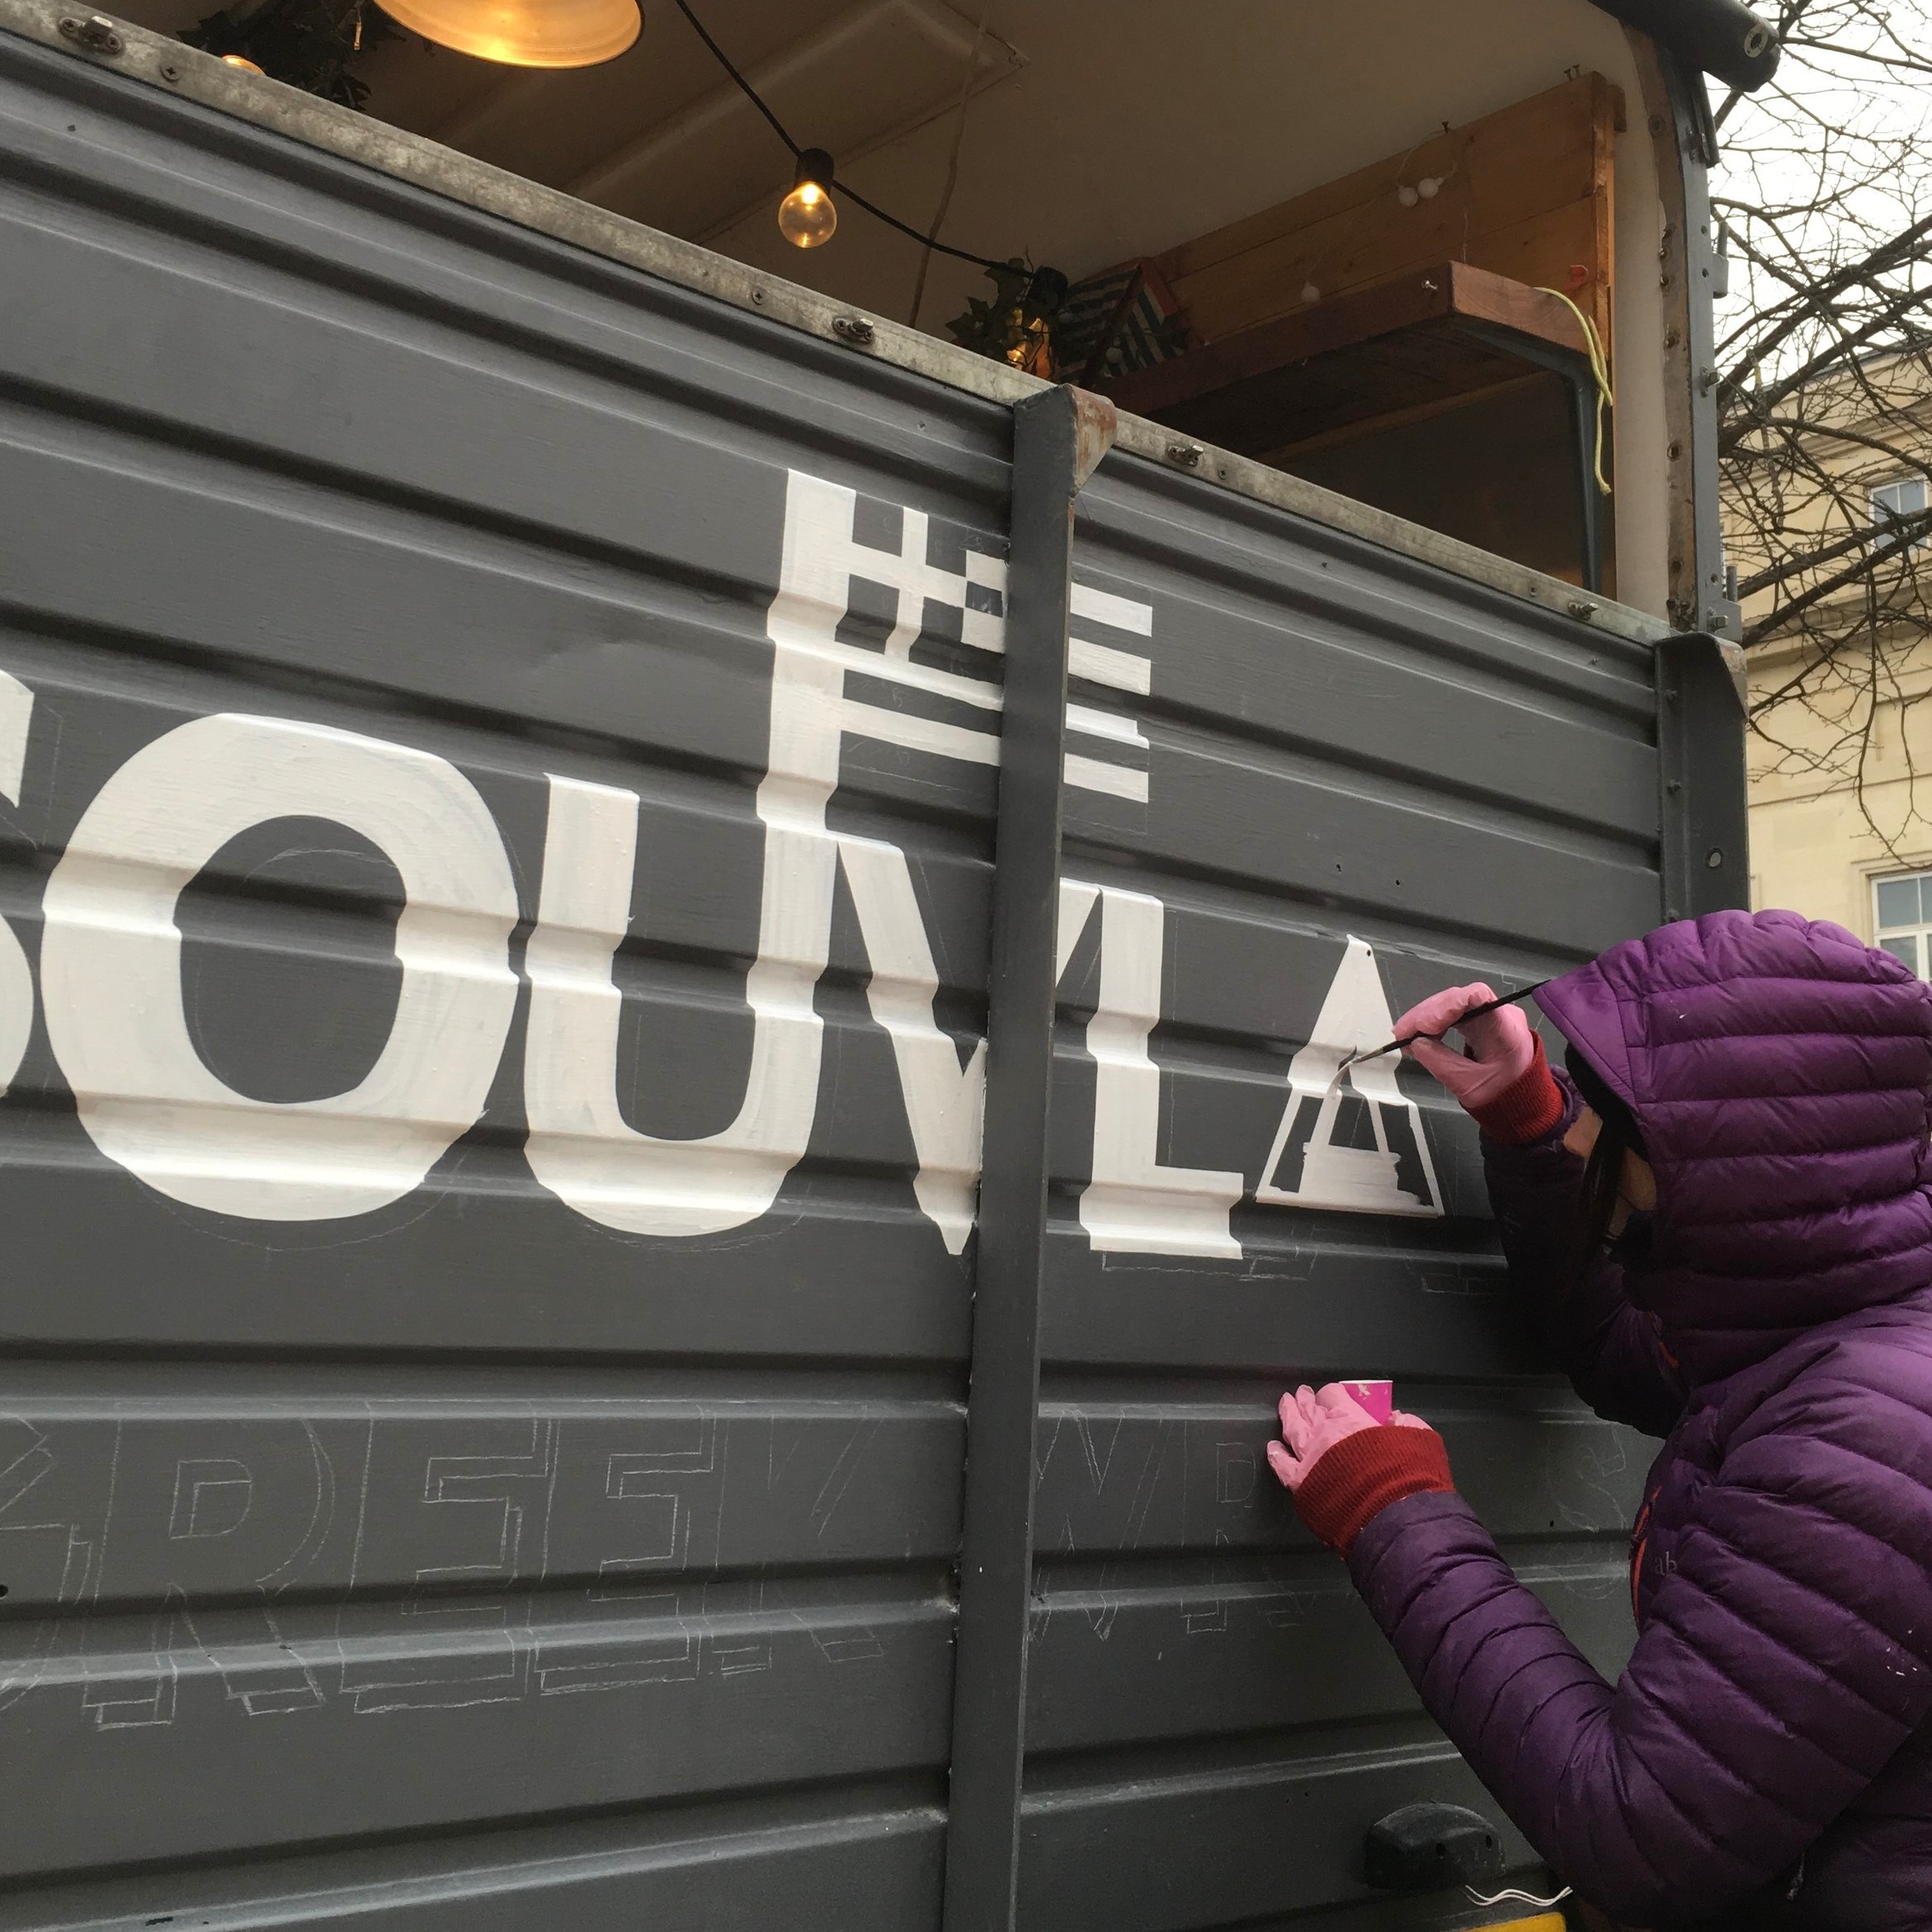 Painting progress of a food truck spelling 'Souvlaki' on ridged metal.